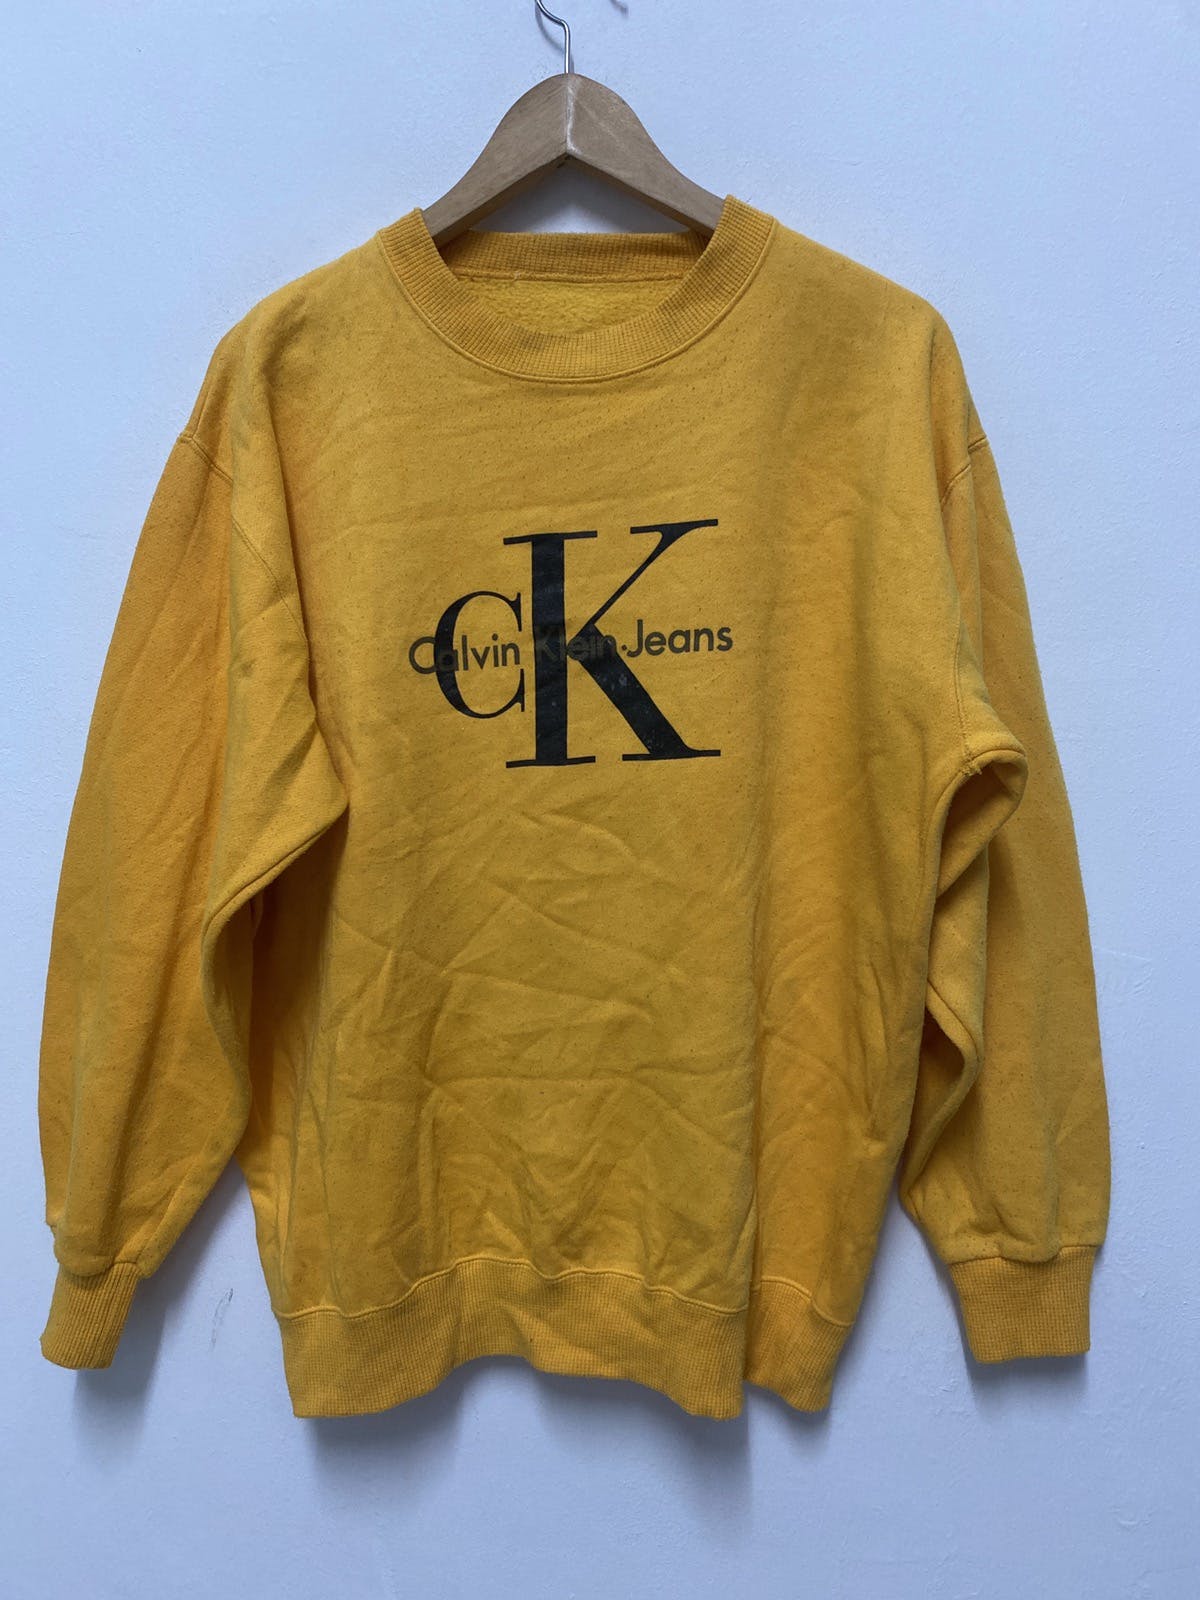 Calvin Klein Jeans Raf Era Big Logo YellowSweatshirt Size L - 1